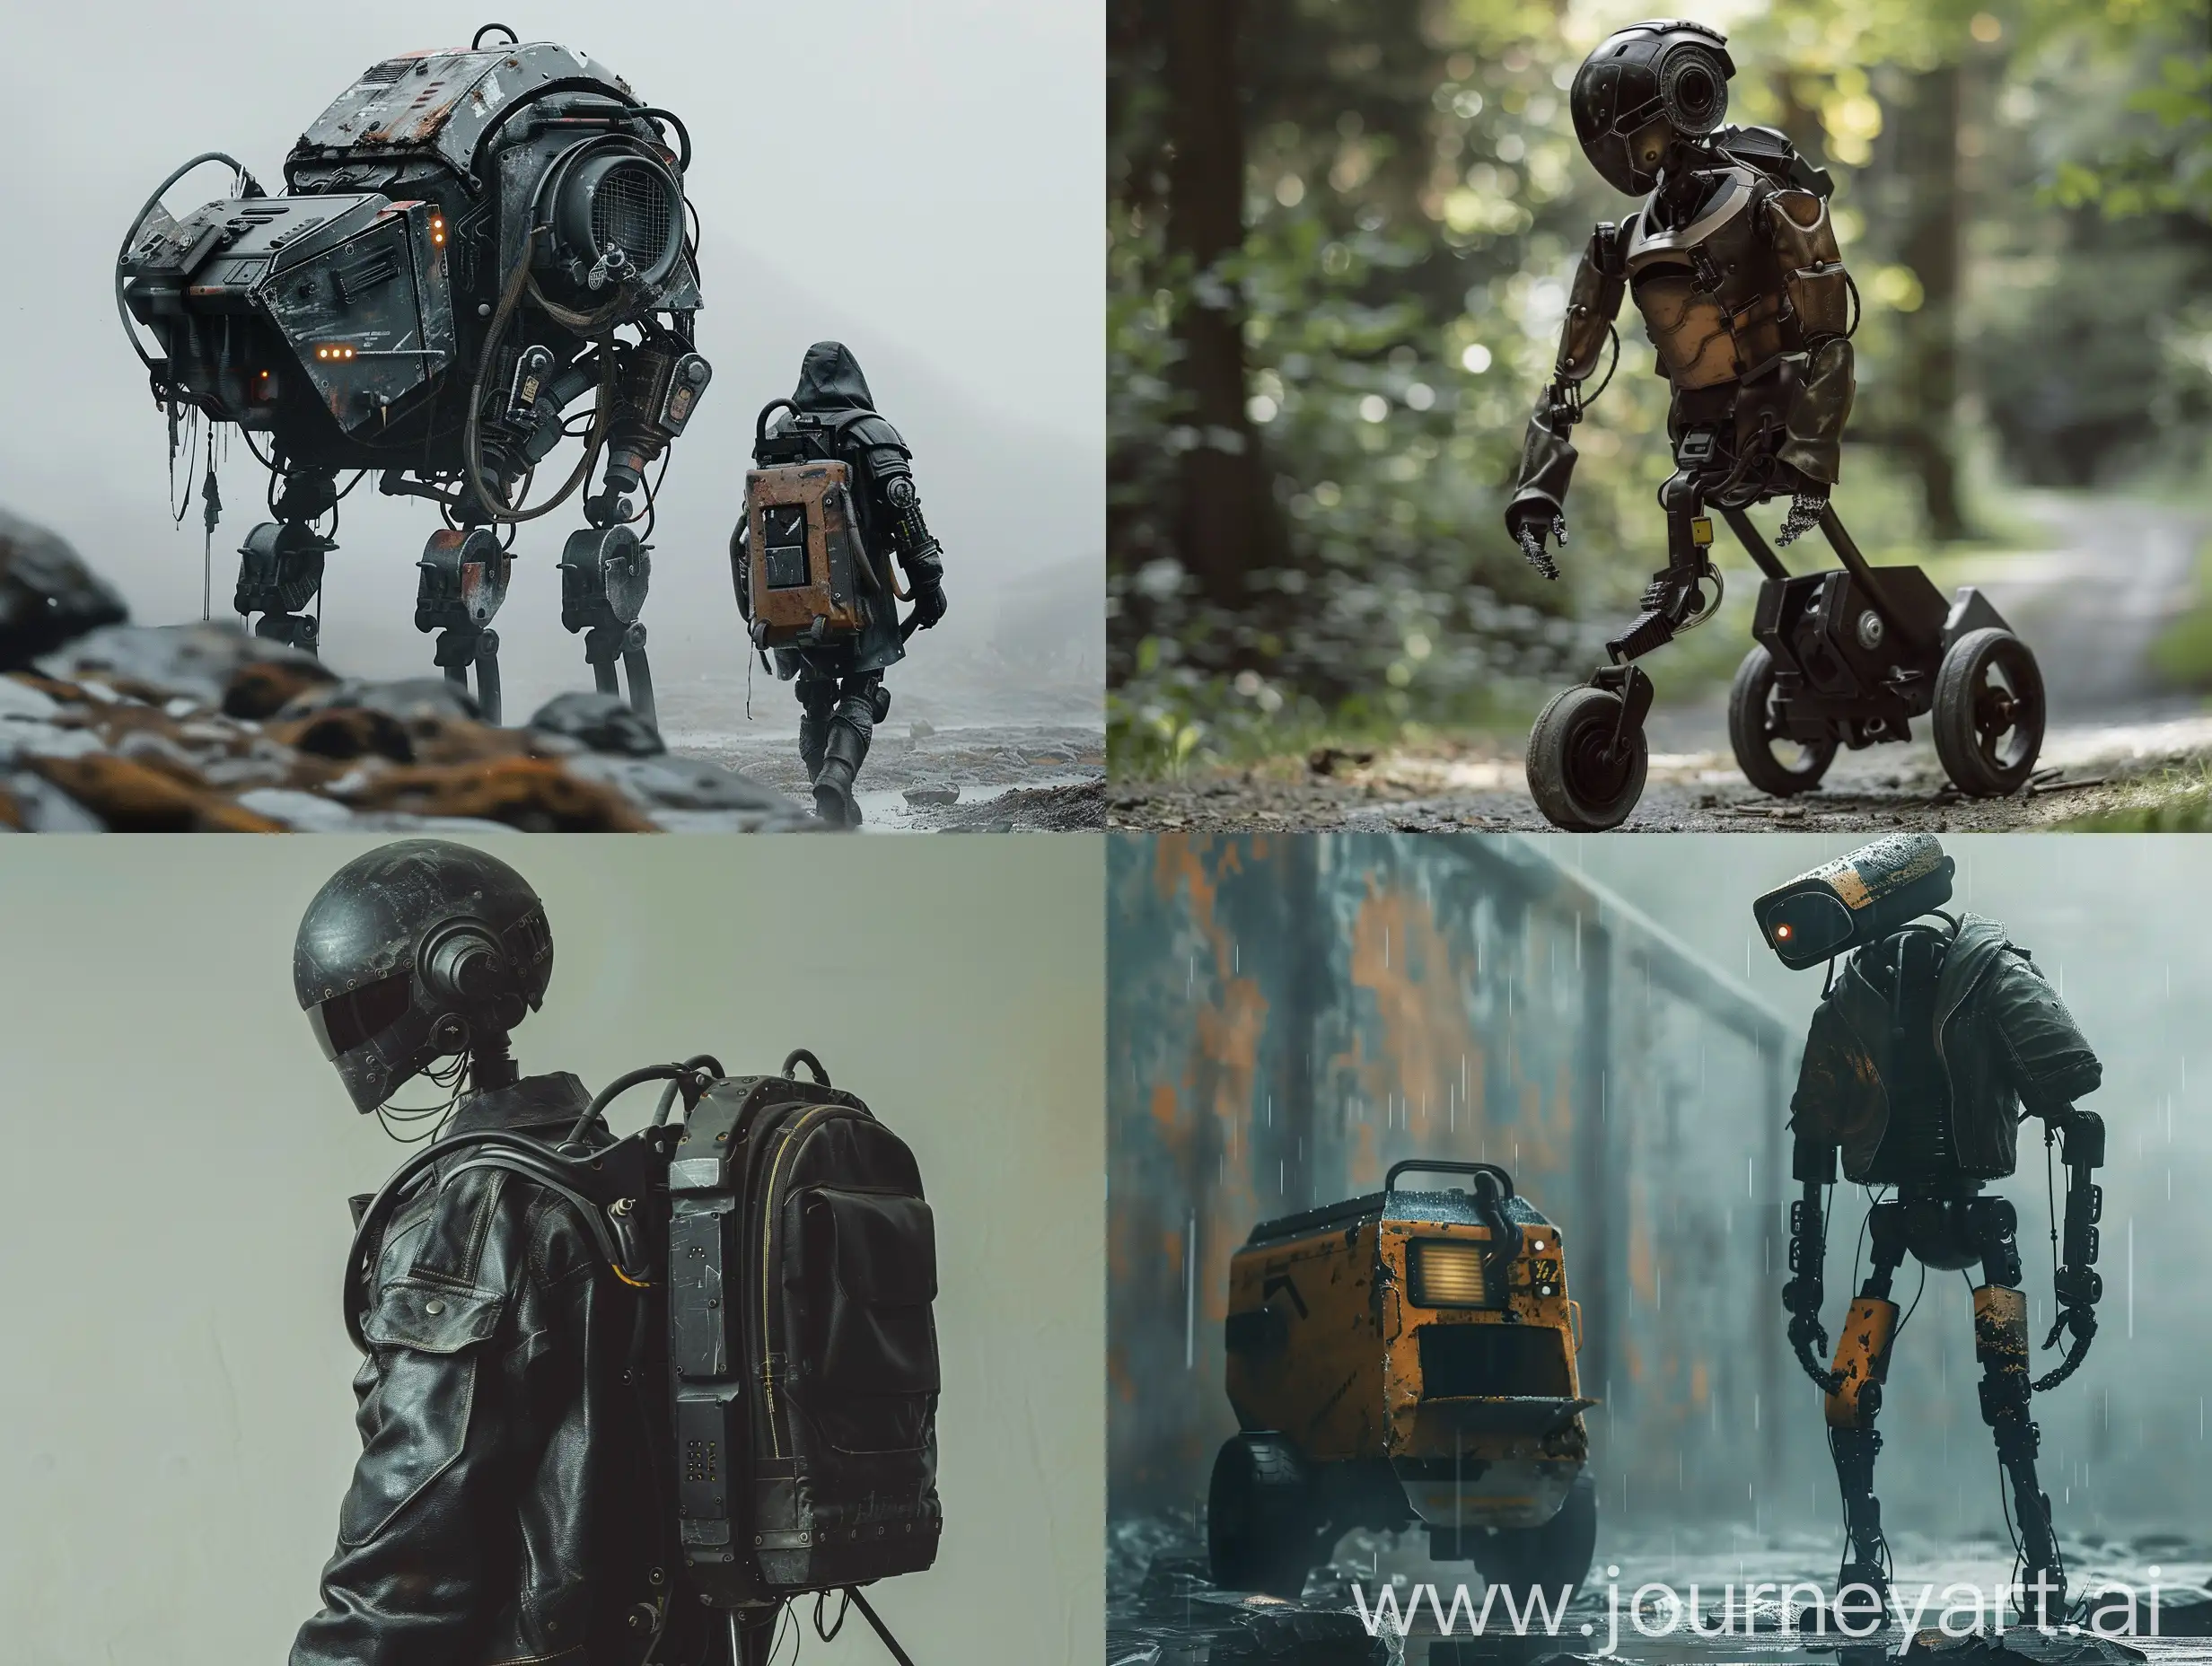 a robot wearing a leather jacket, walking alone with a mechaniacal walker cabin